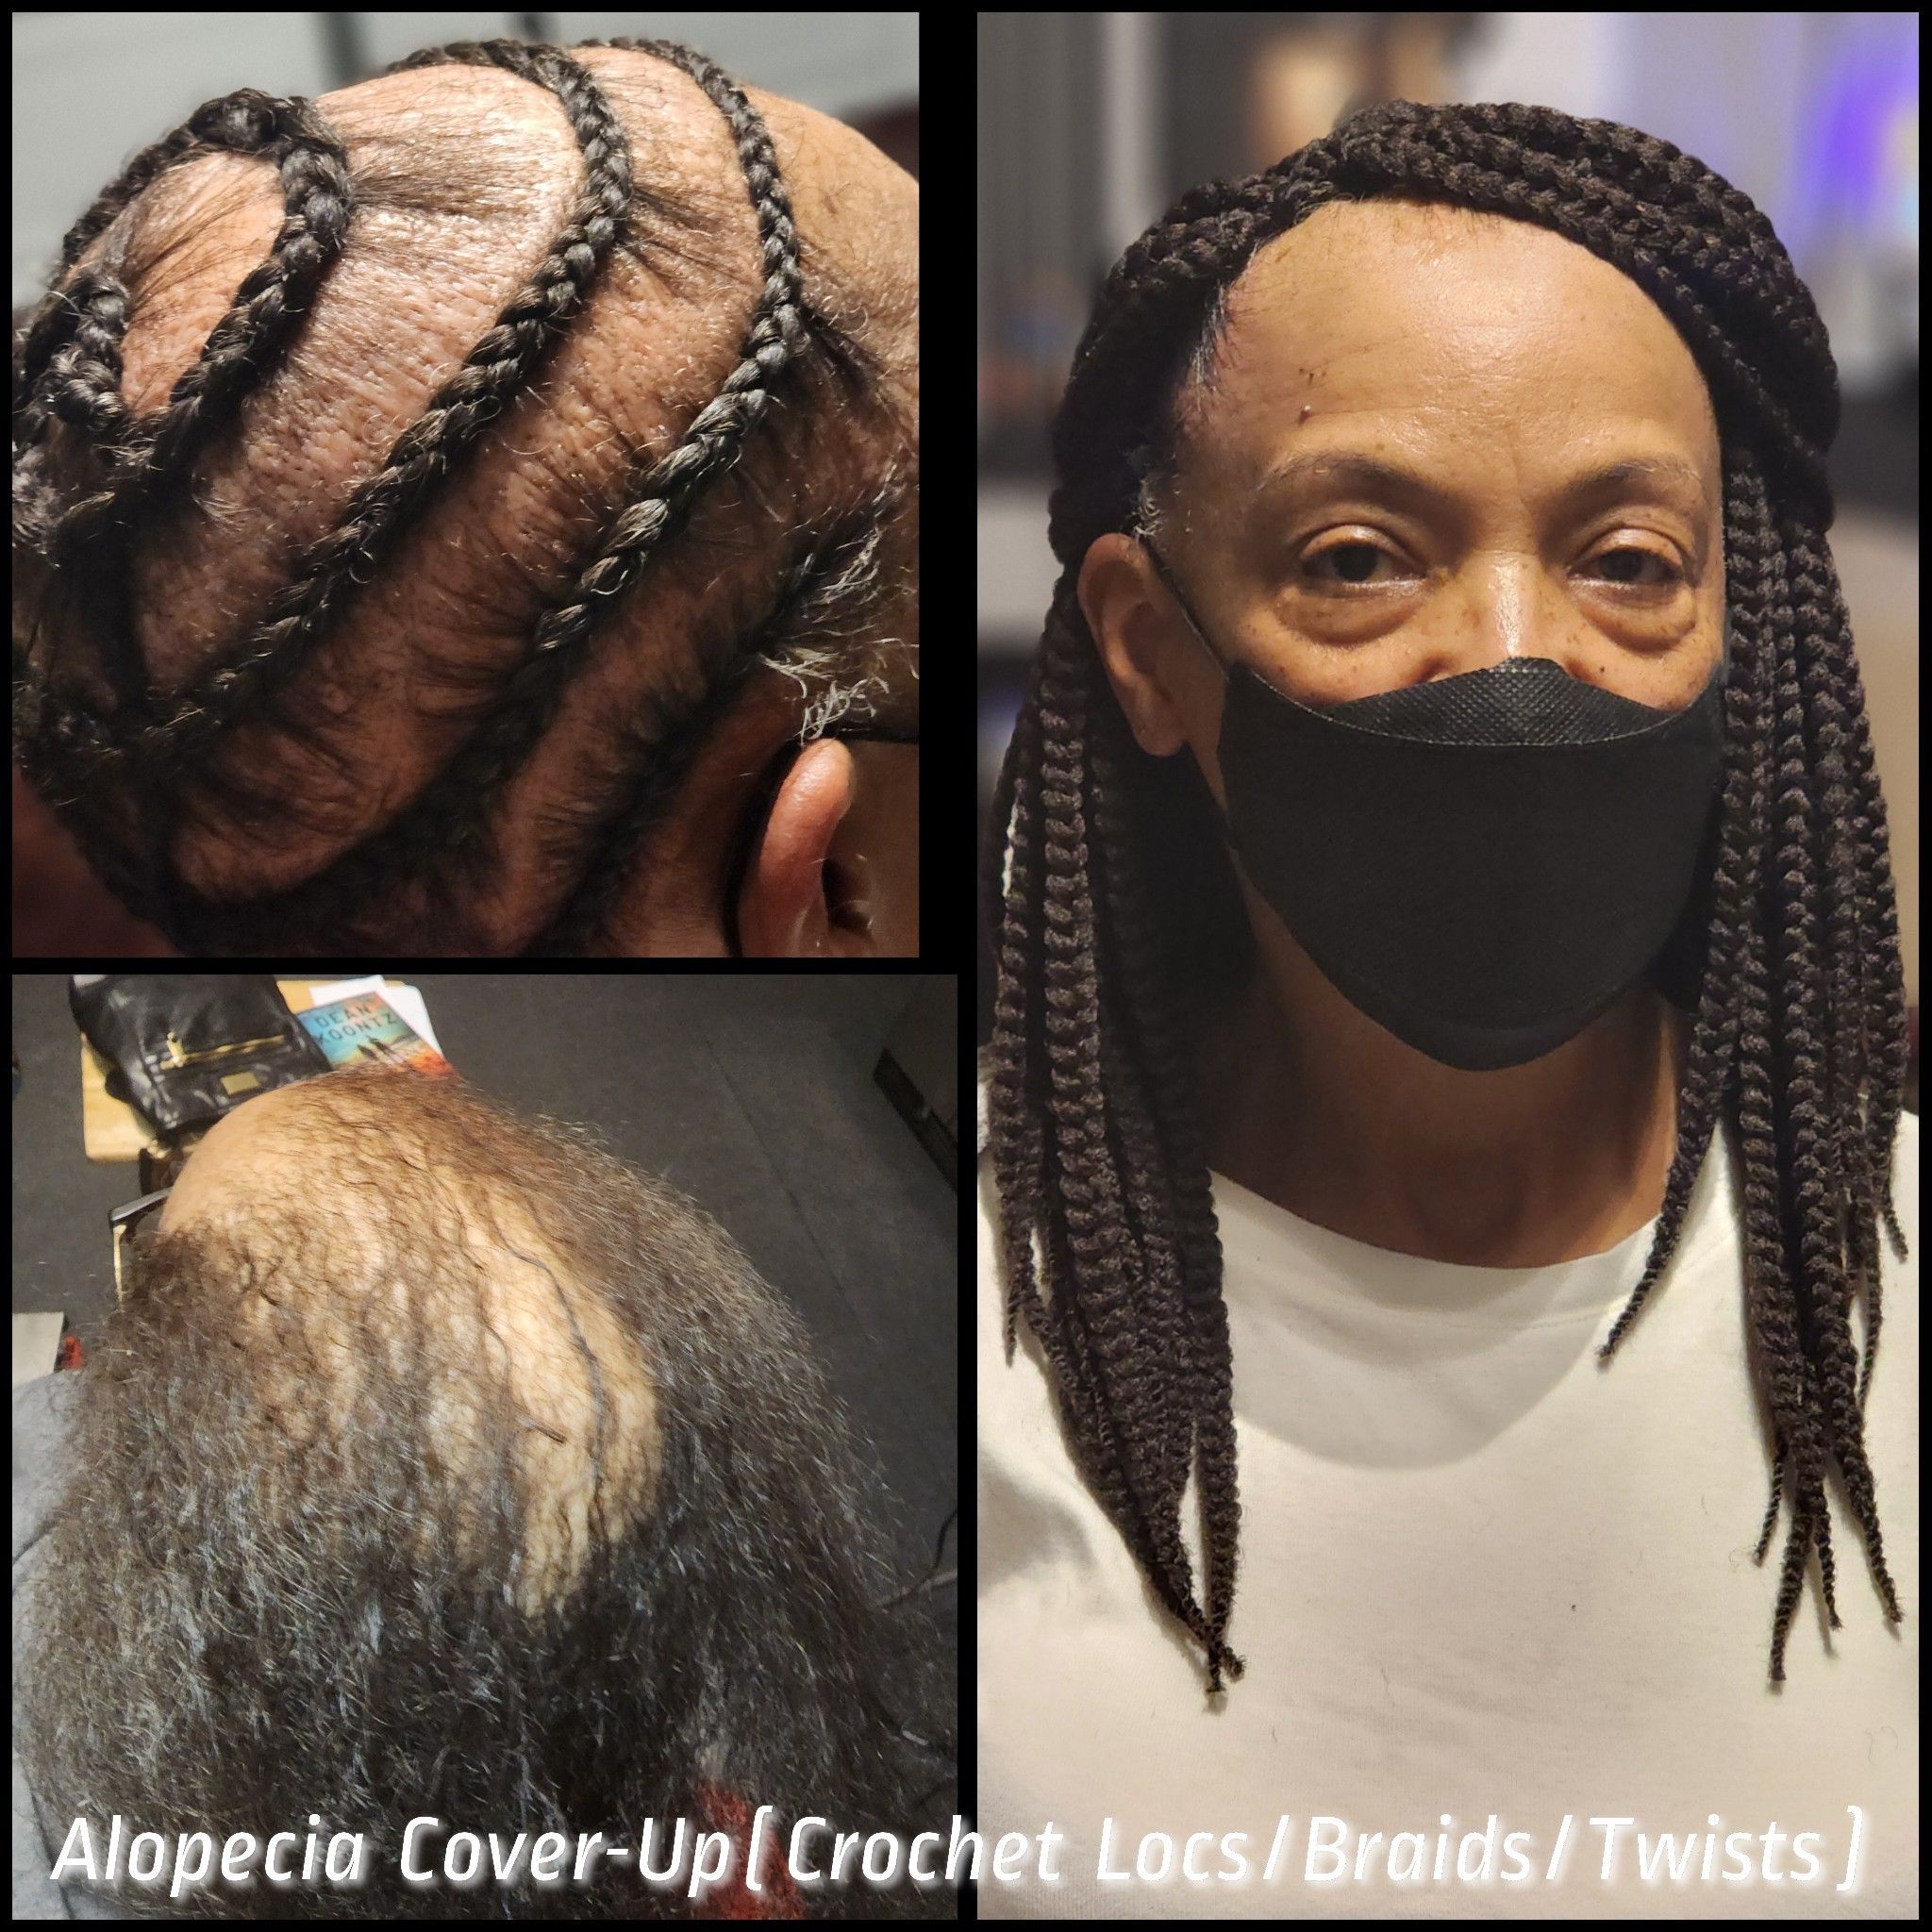 Alopecia Cover-Up (Crochet Locs/Twists/Braids) portfolio